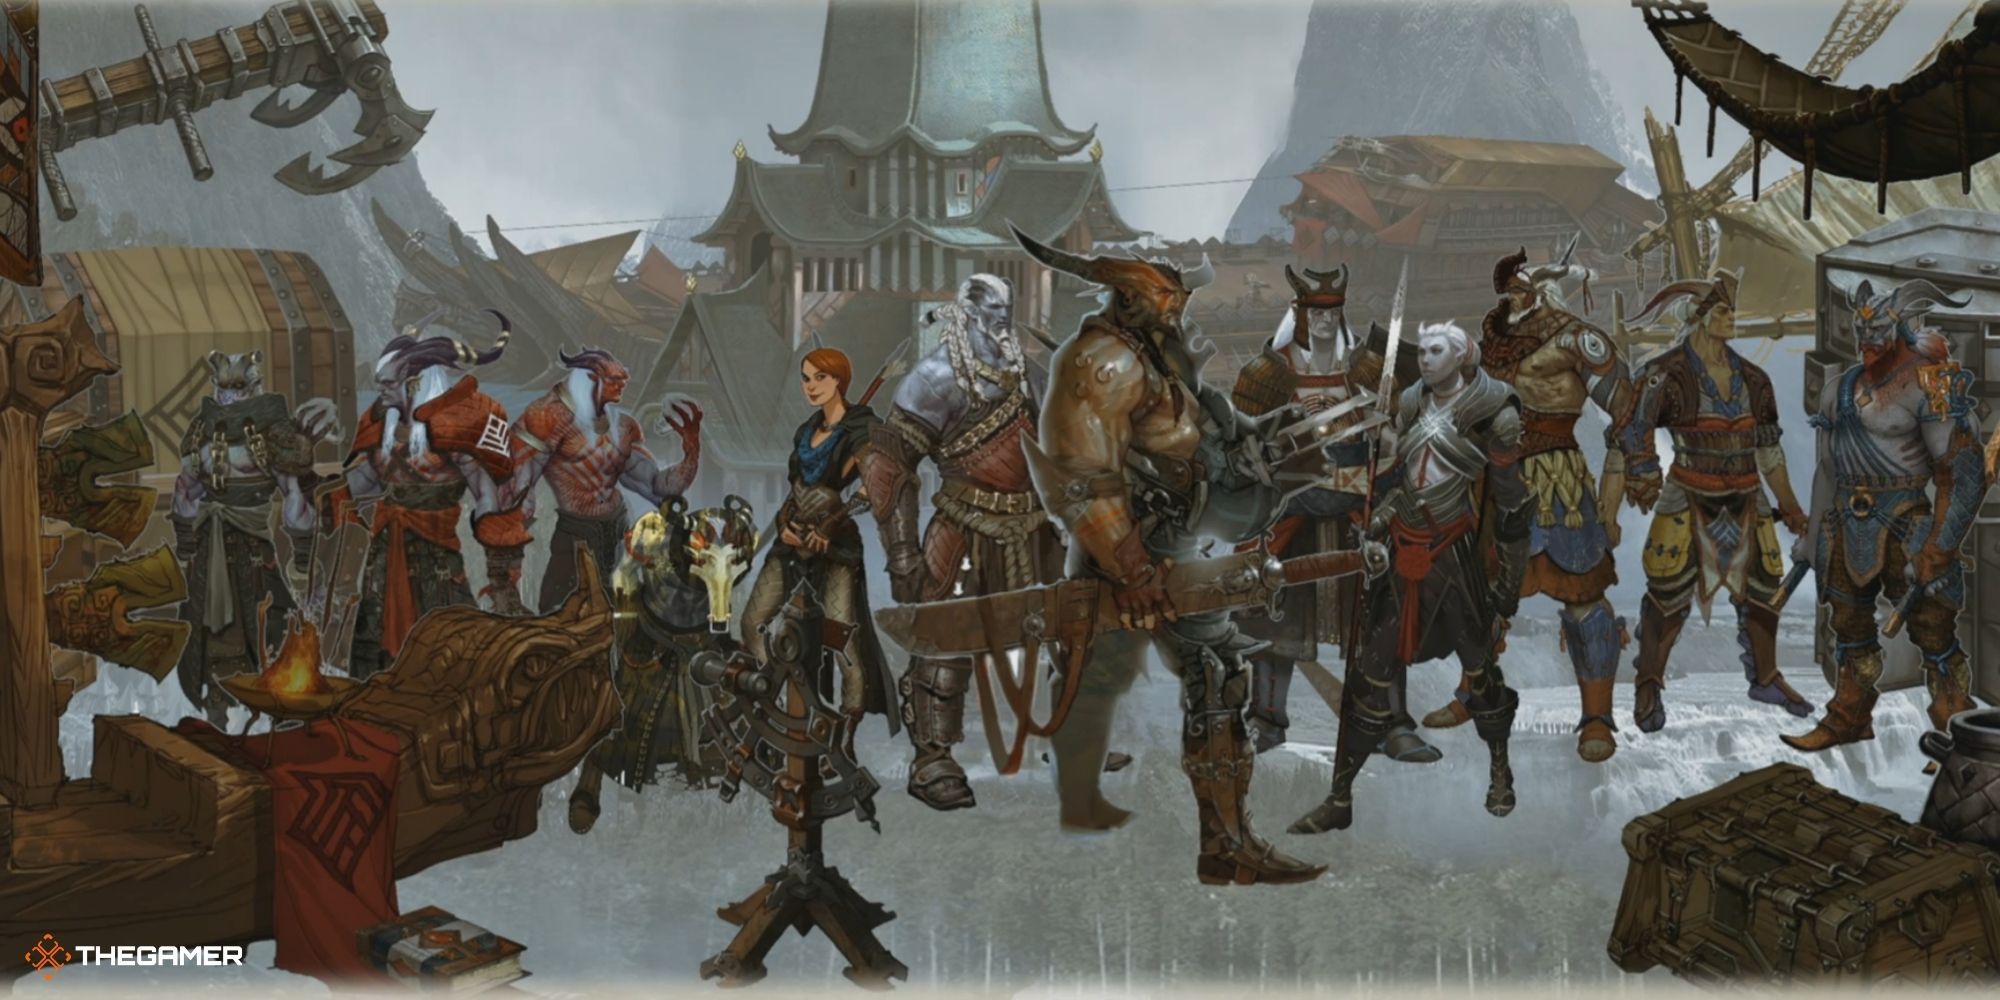 Dragon Age 2 - Qunari moodboard displaying various parts of the culture